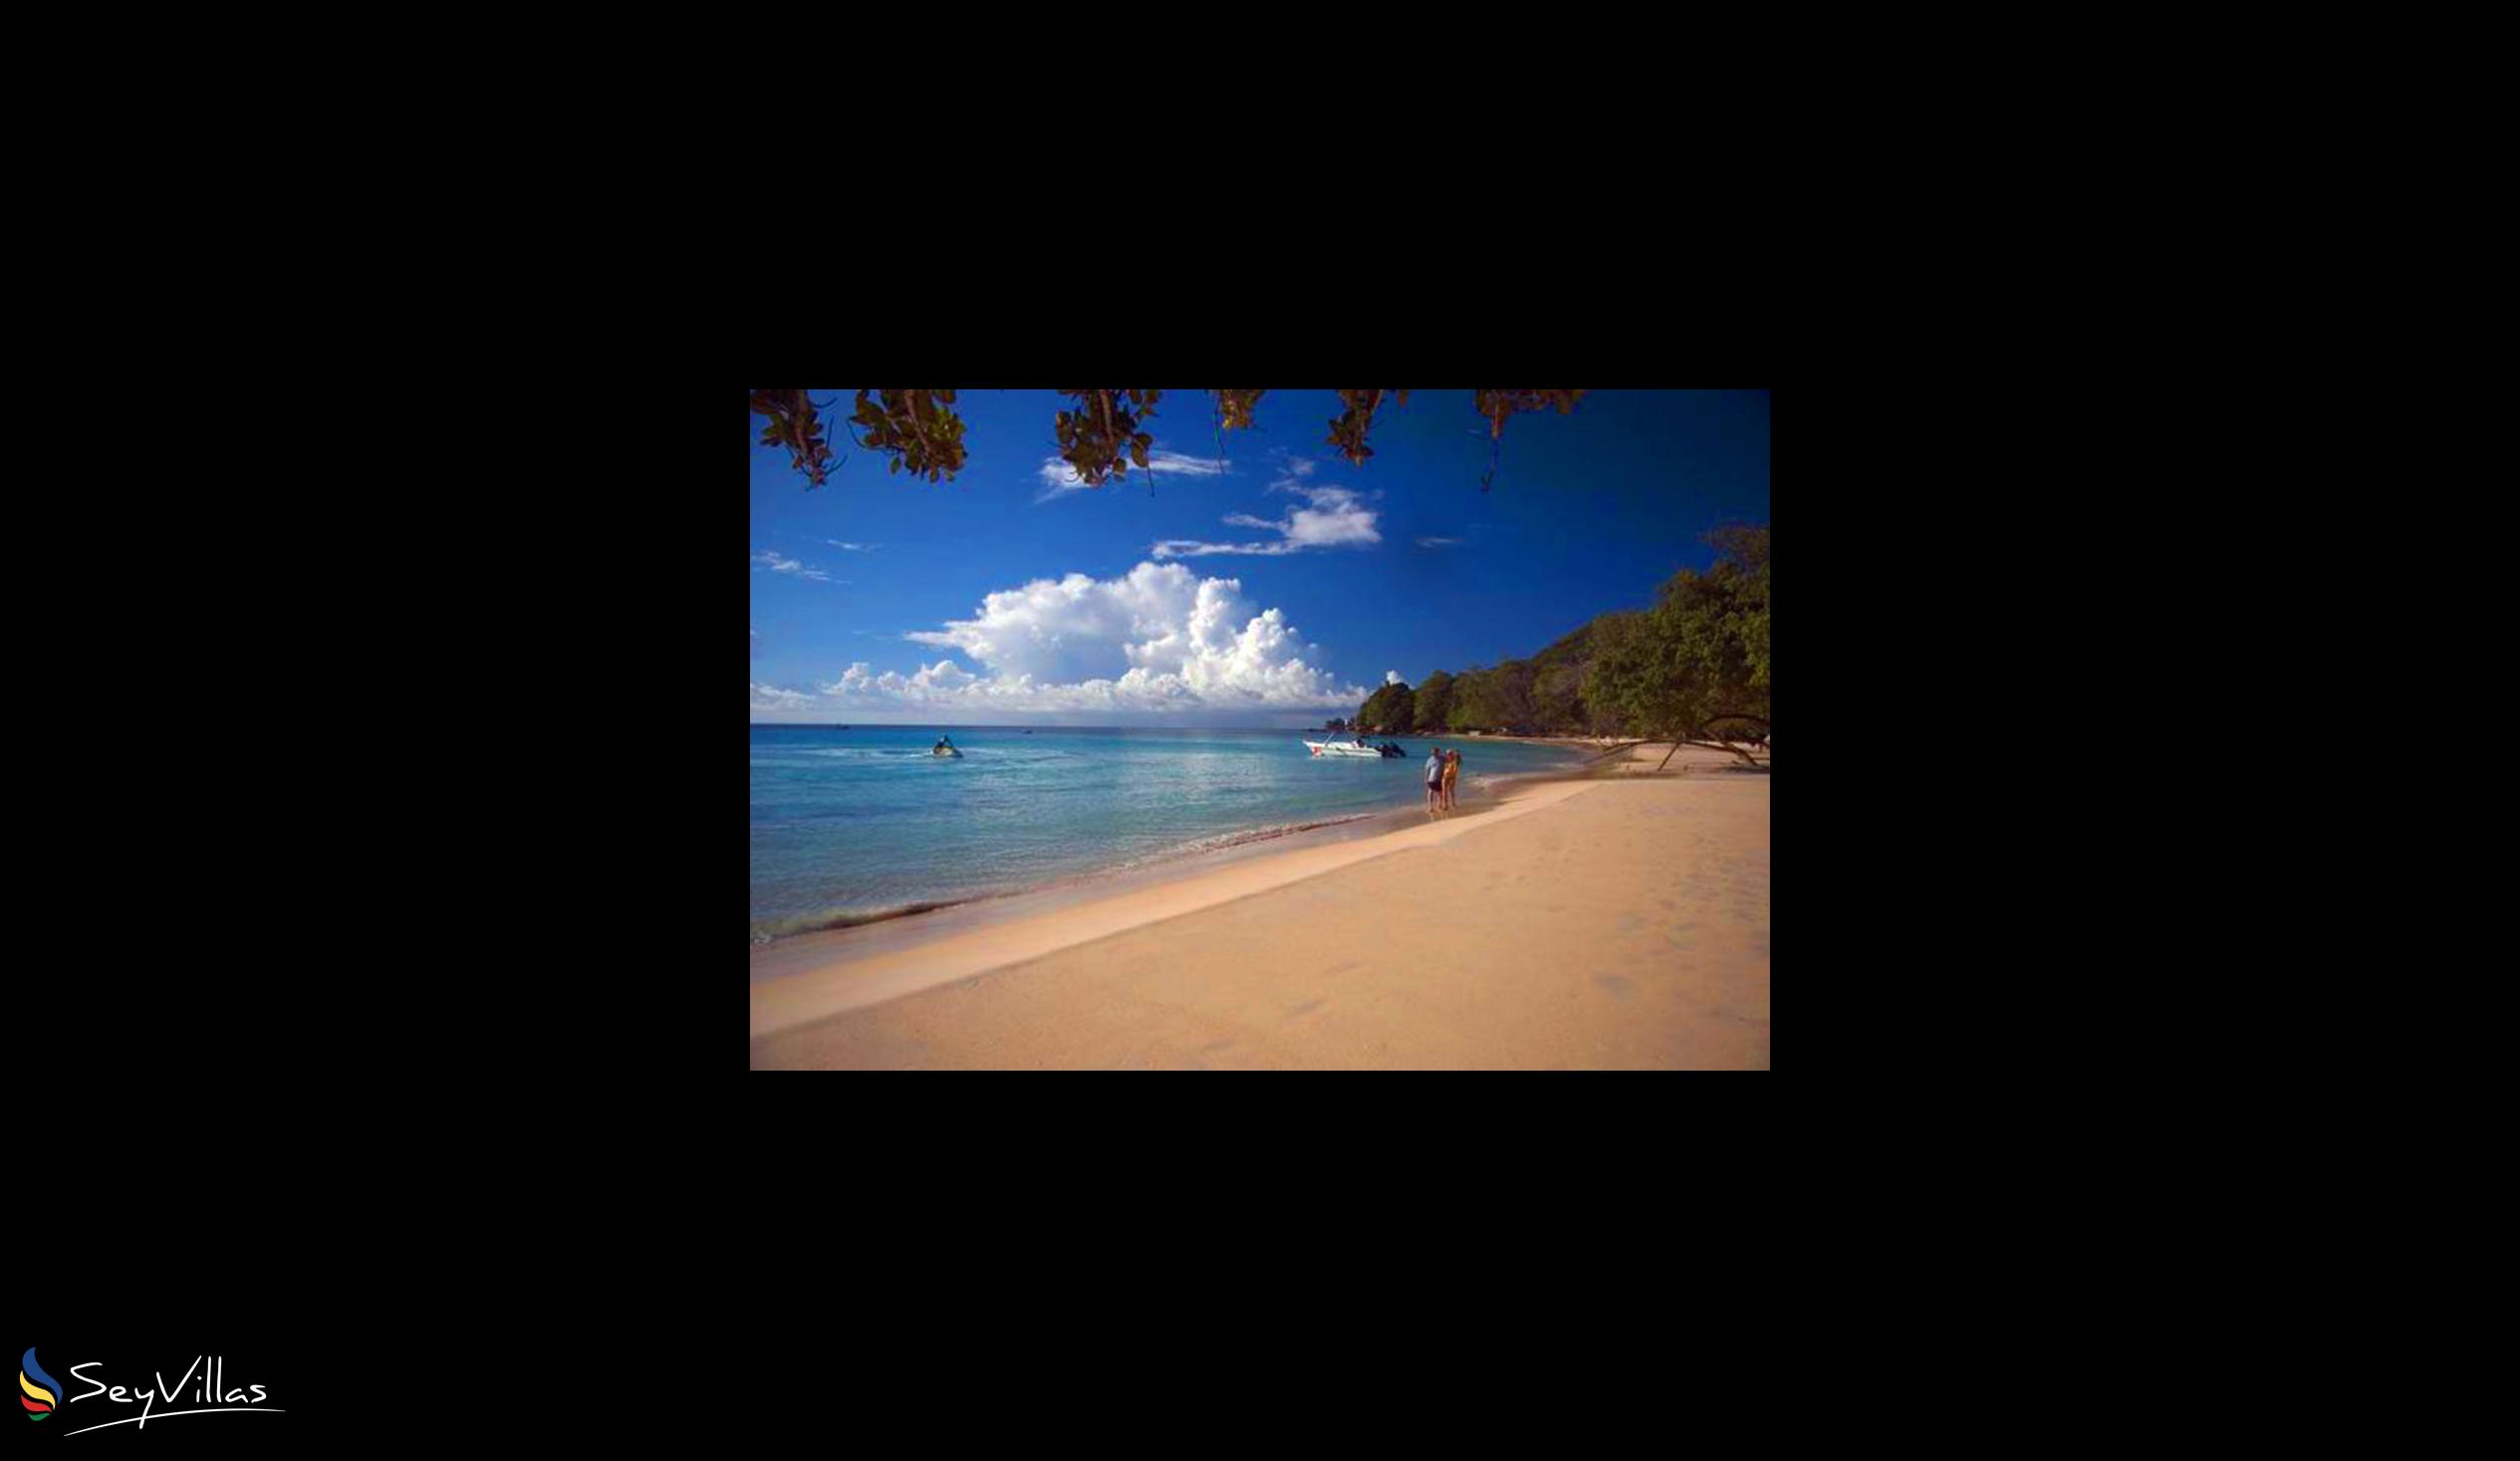 Foto 29: Row's Villa - Spiagge - Mahé (Seychelles)